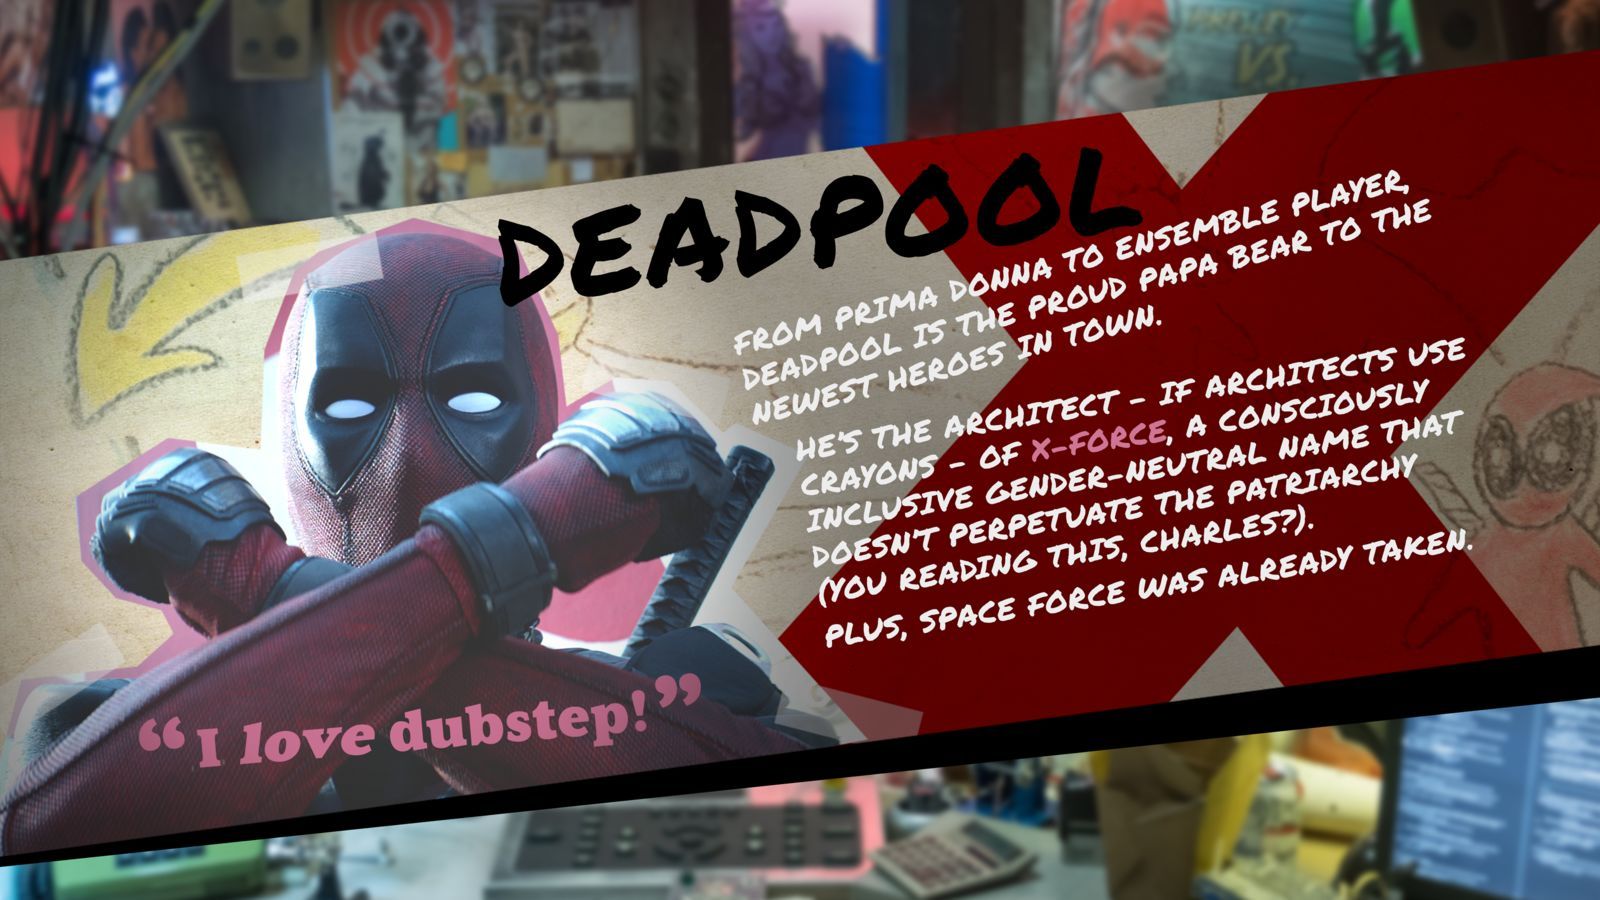 Wade Wilson's X-Force Bio in Deadpool 2